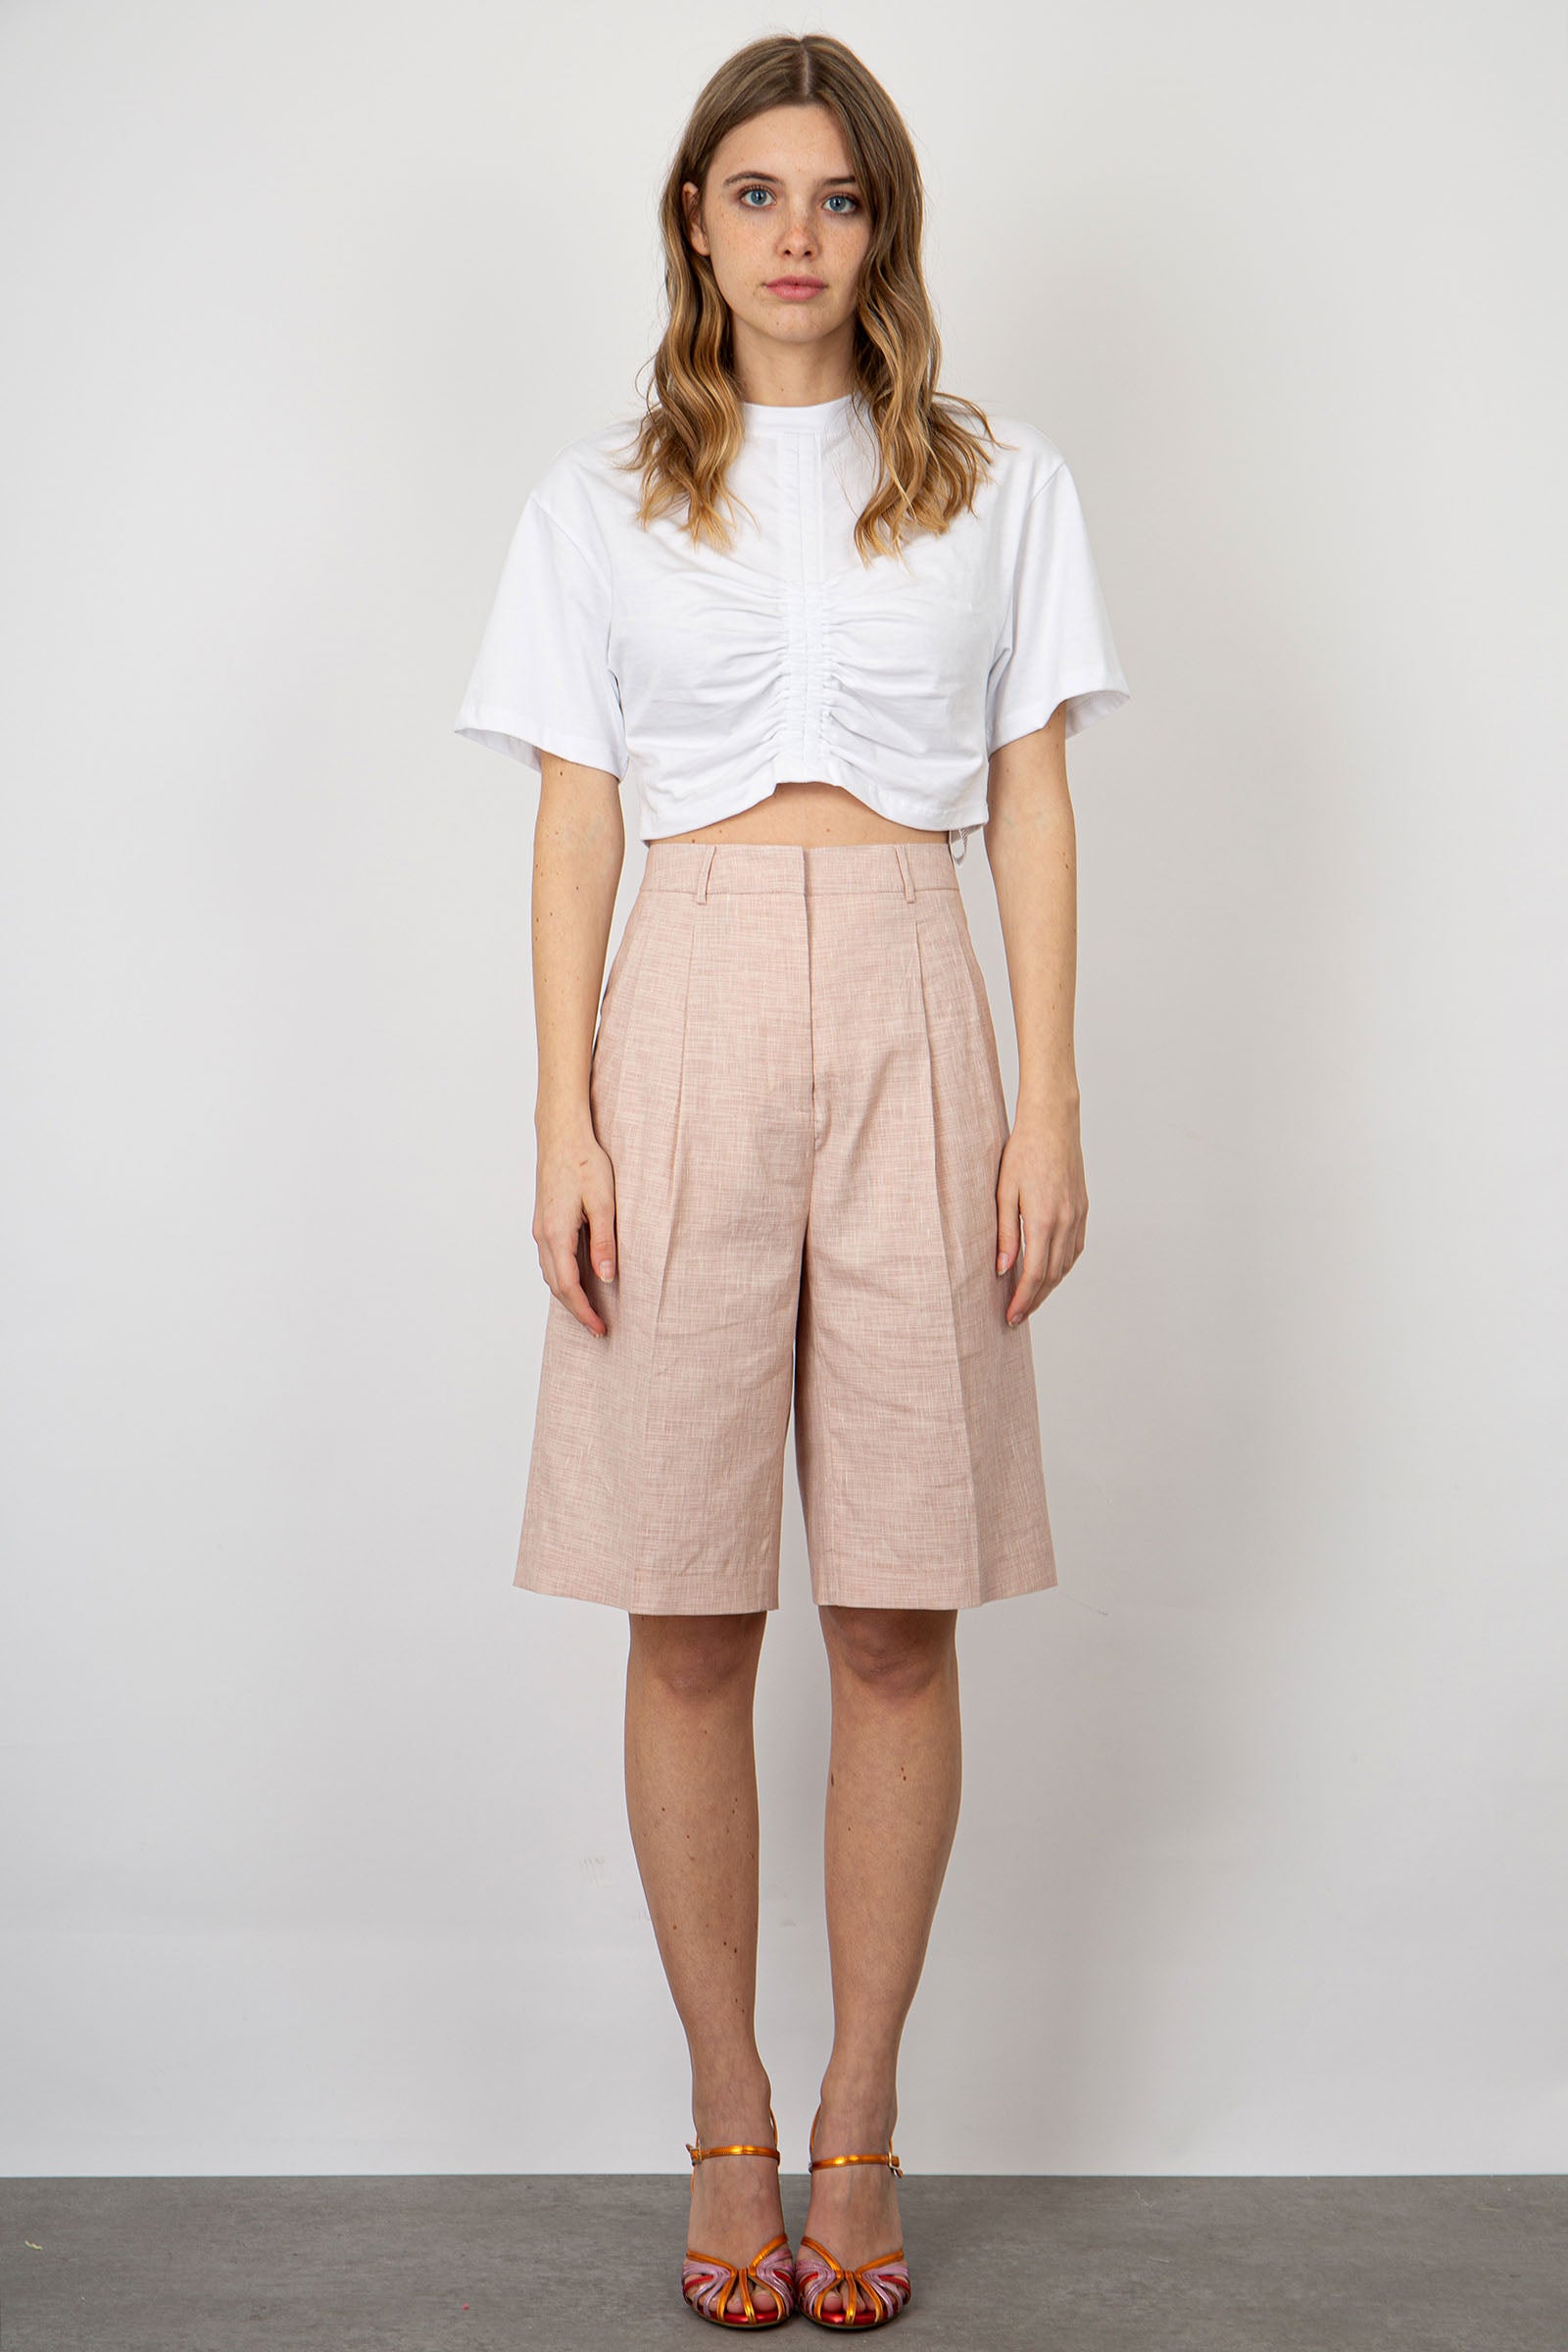 Semicouture Ellen Silk Bermuda Shorts in Light Pink - 6